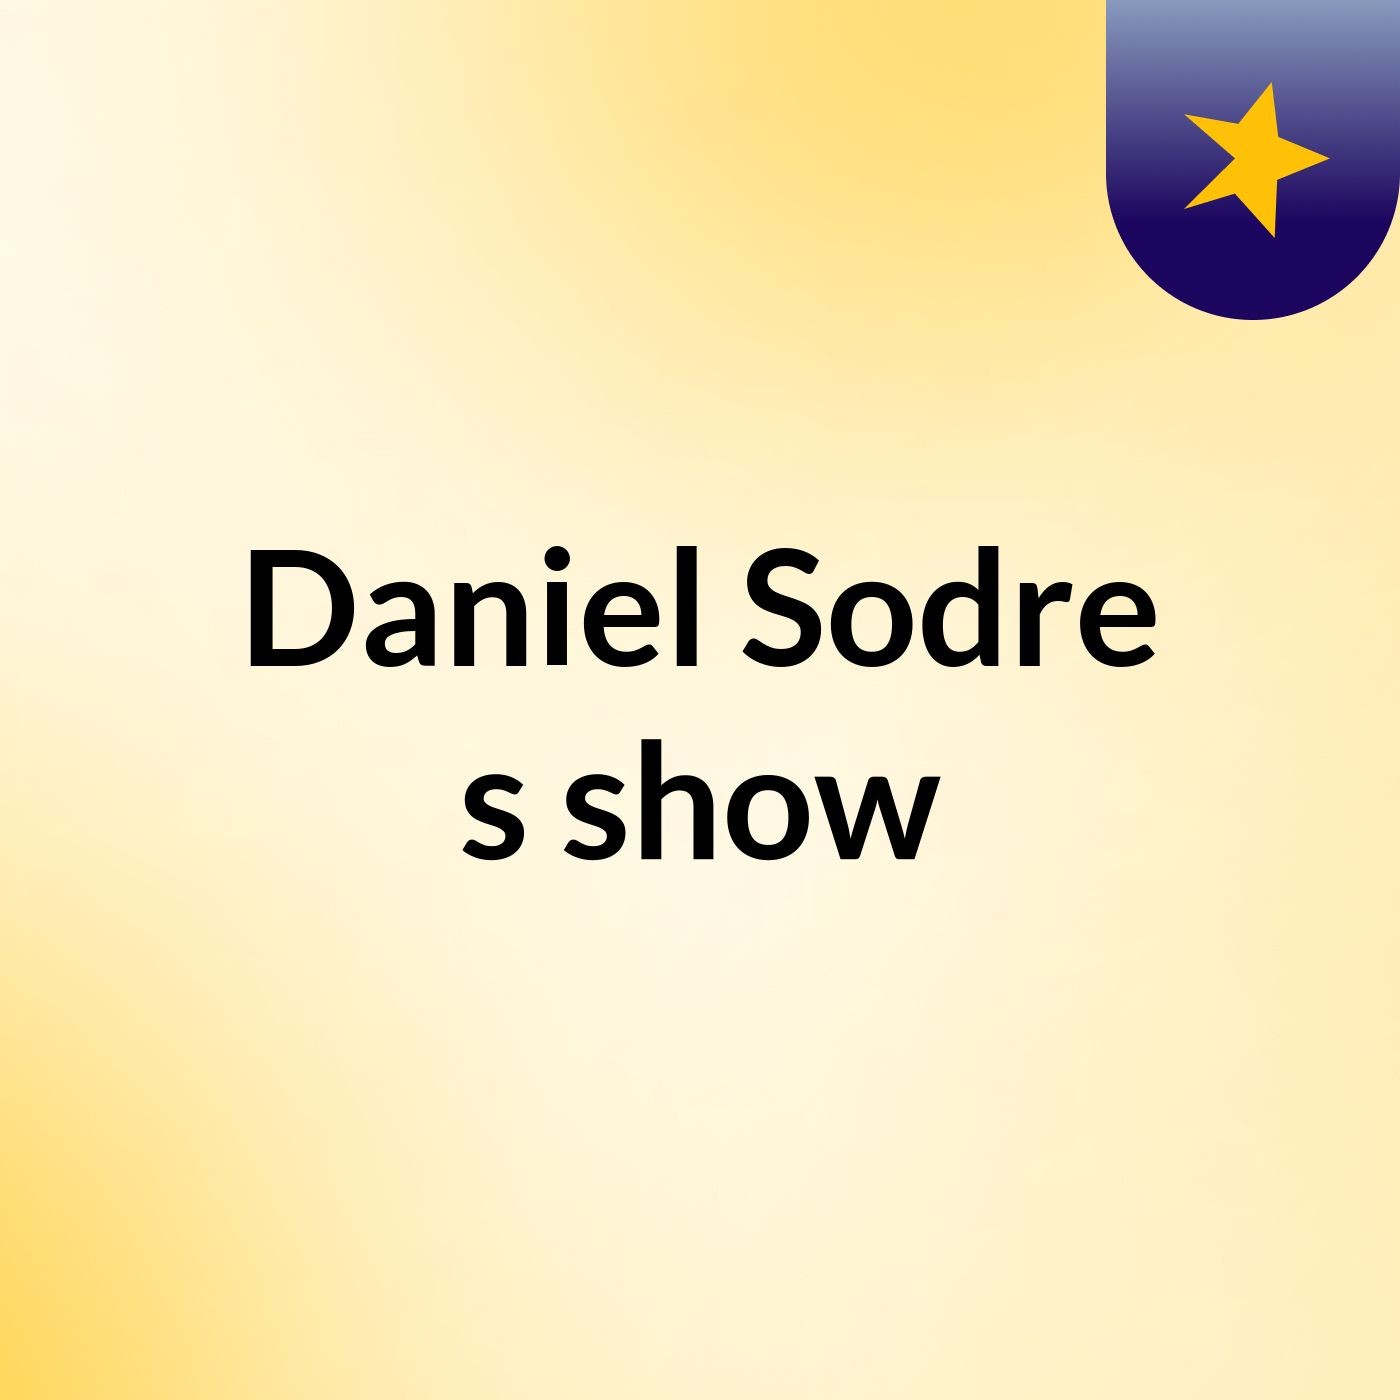 Daniel Sodre's show